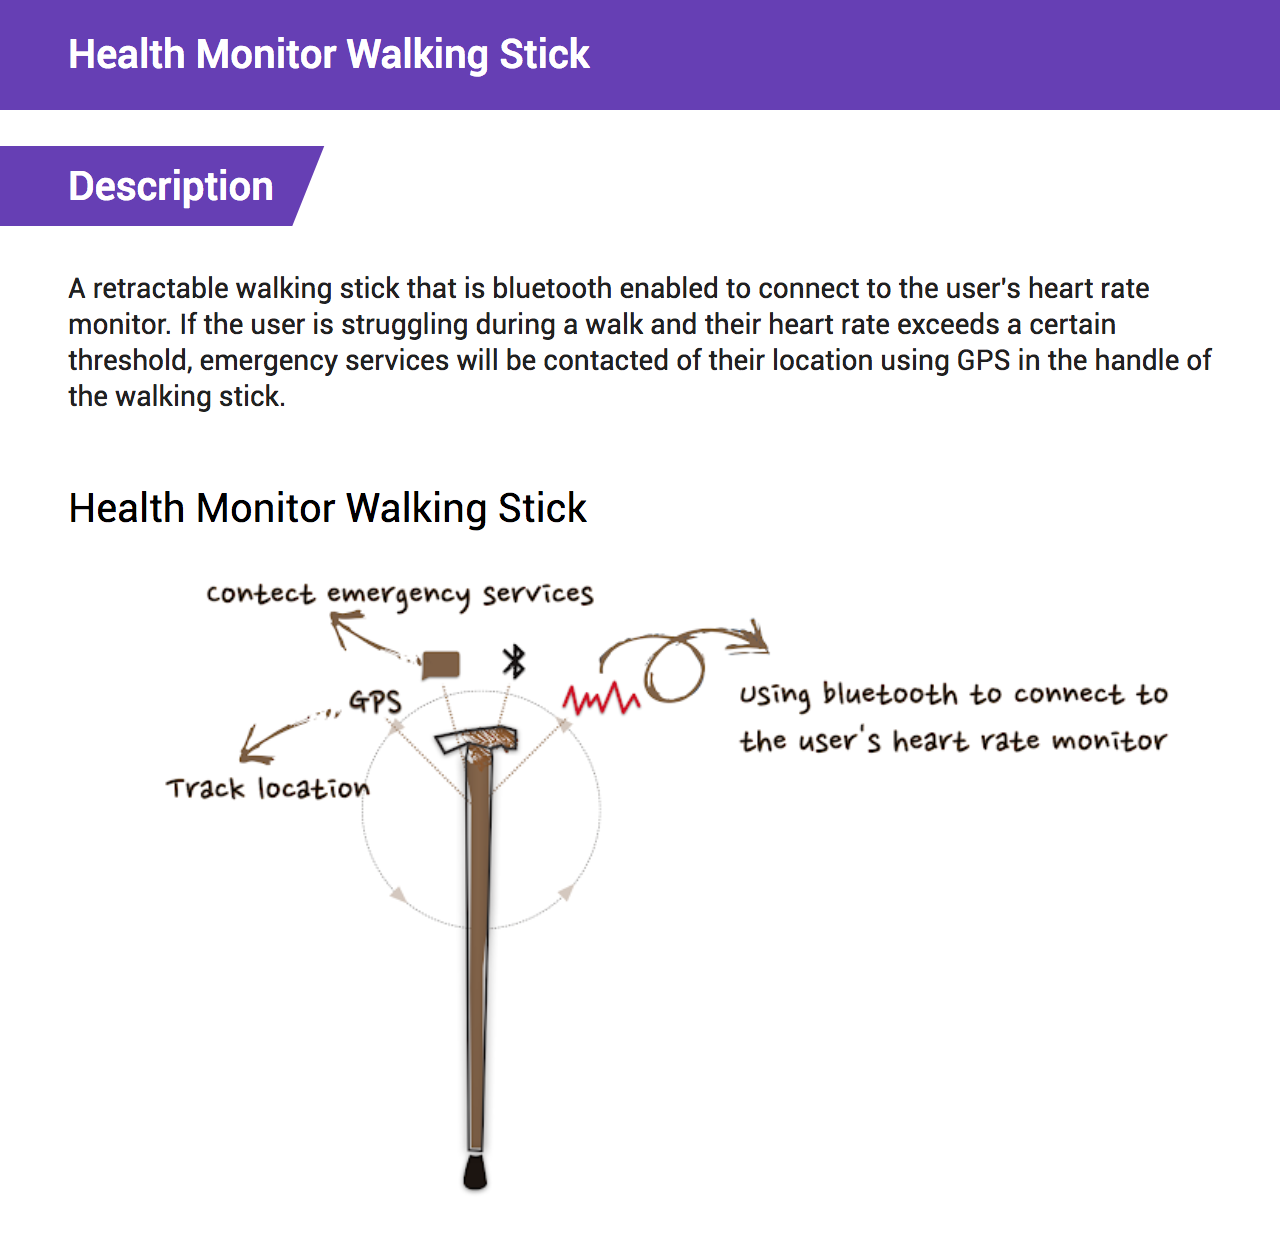 Health Monitor Walking Stick